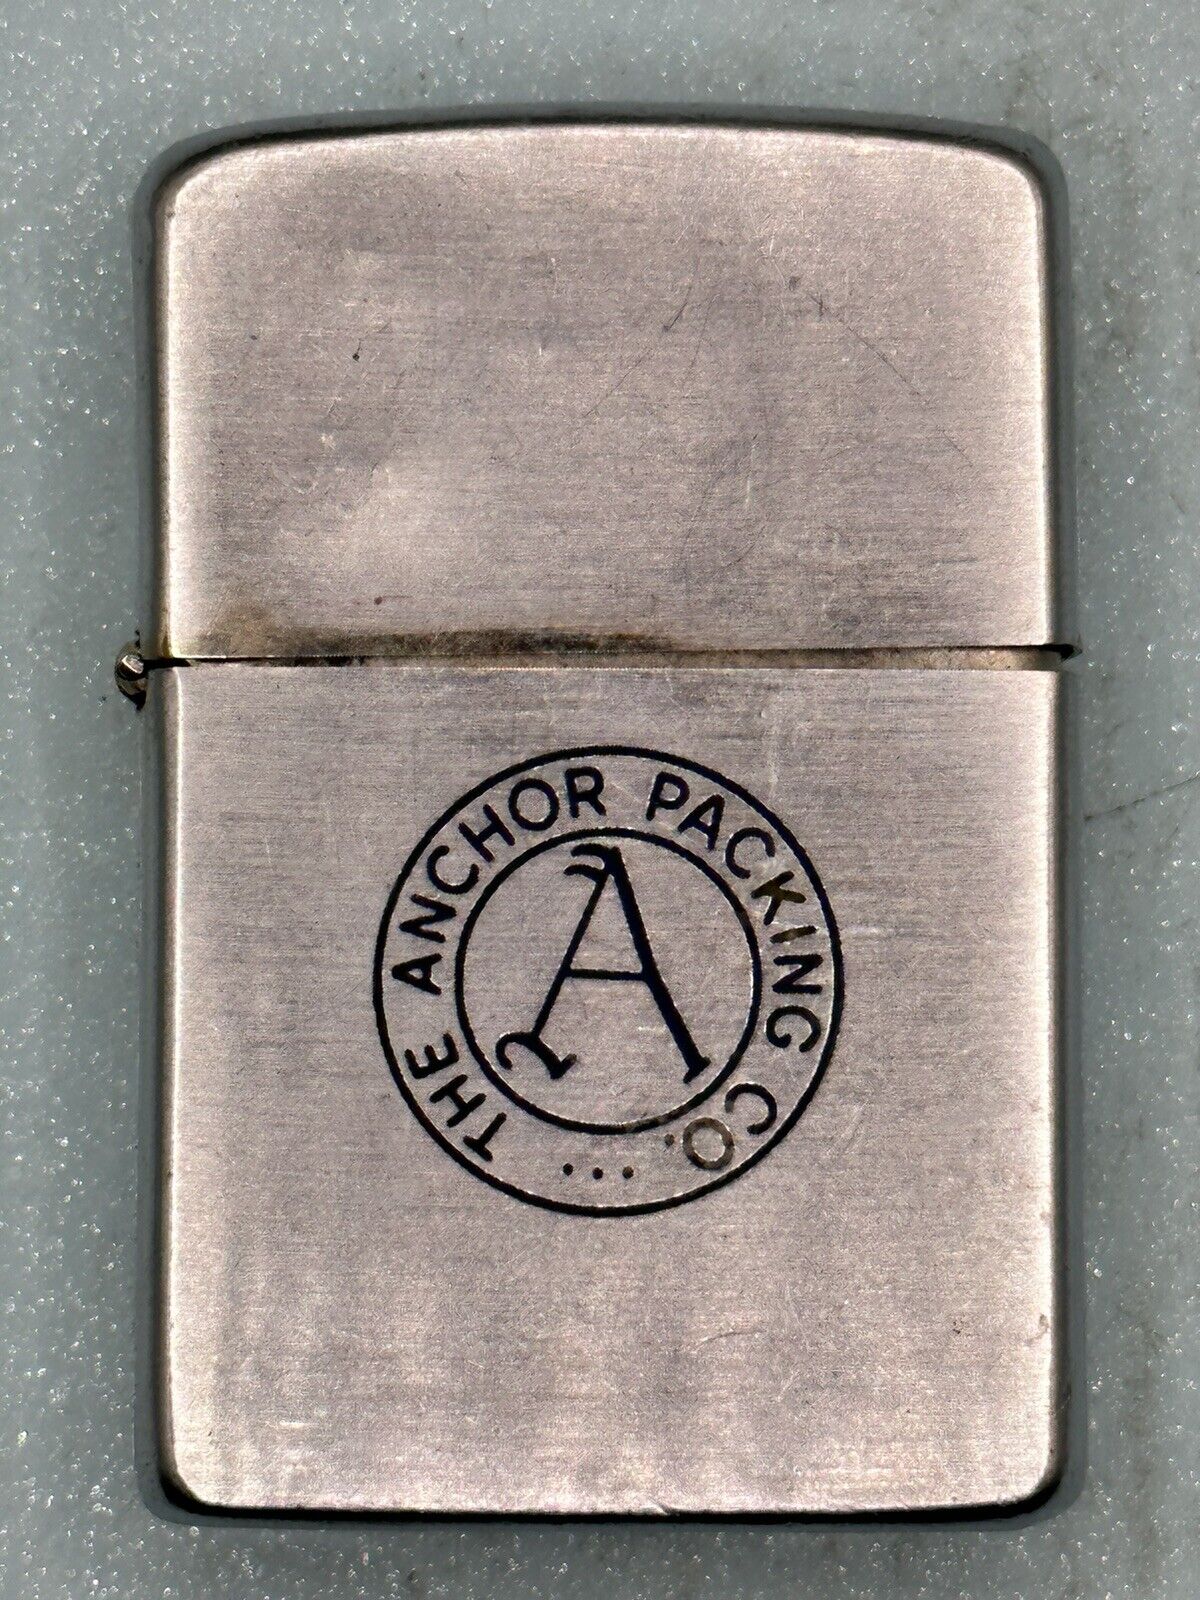 Vintage 1958 The Anchor Packing Co Advertising Chrome Zippo Lighter